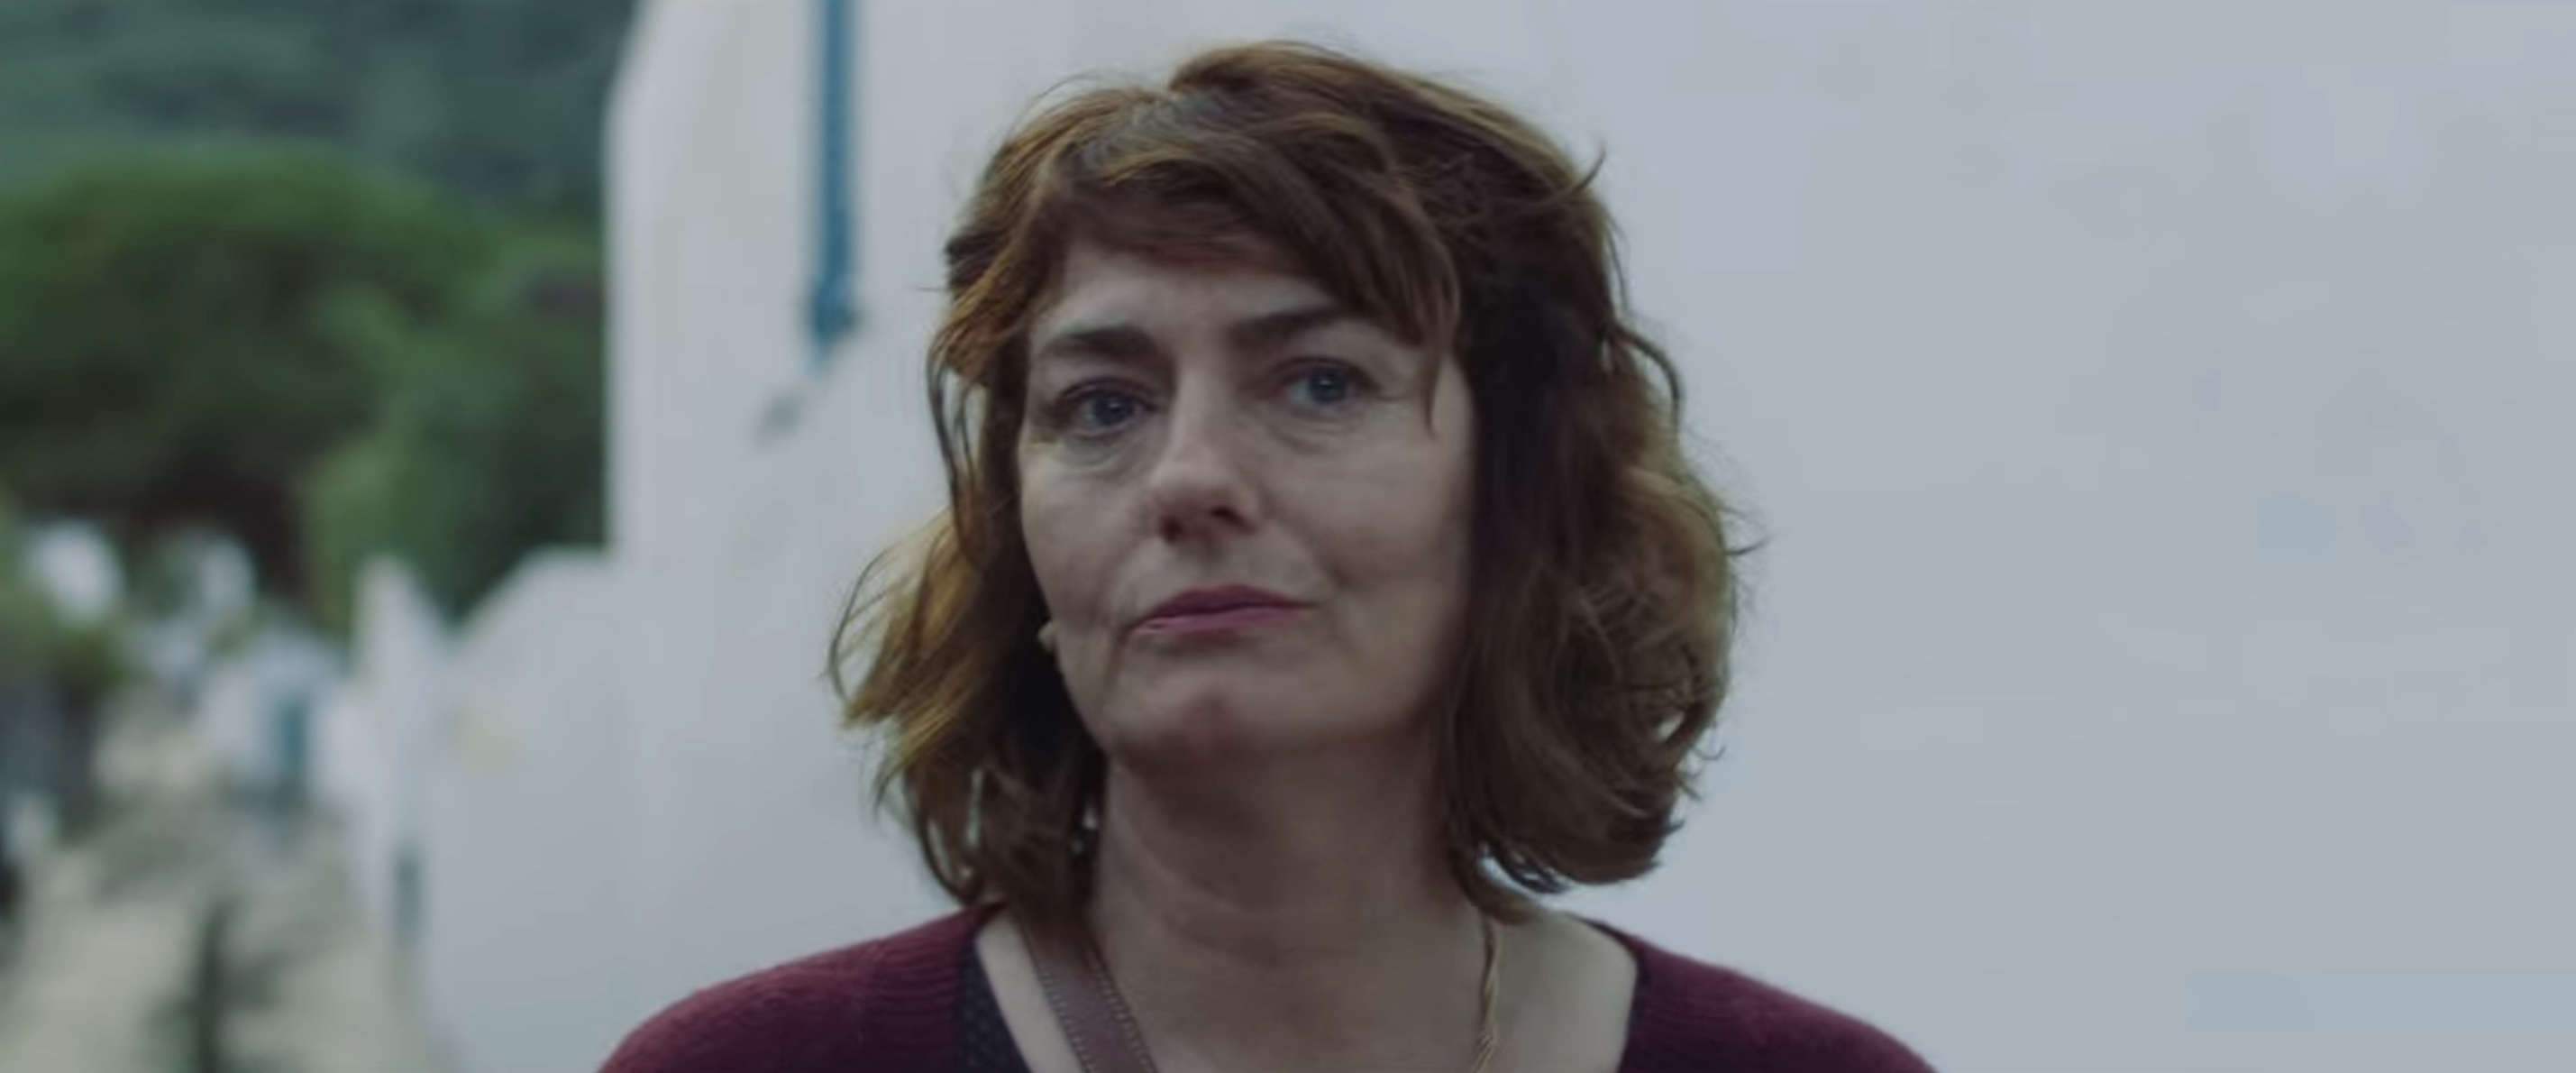 Stromboli Cast on Netflix - Anna Chancellor as Diane